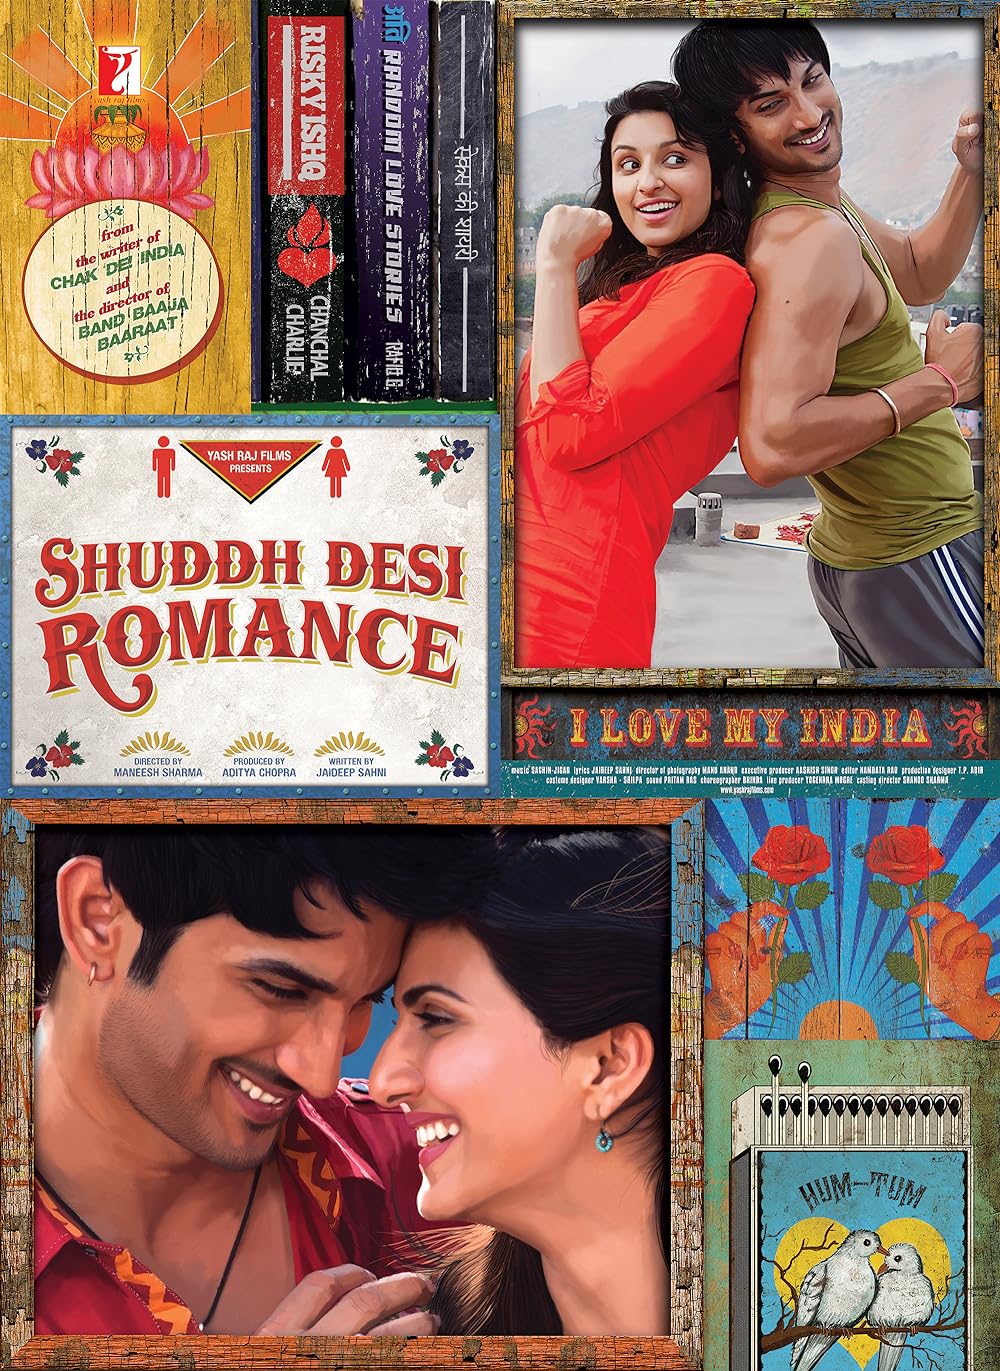 Download Shuddh Desi Romance (2013) Hindi Movie Bluray || 720p [700MB]